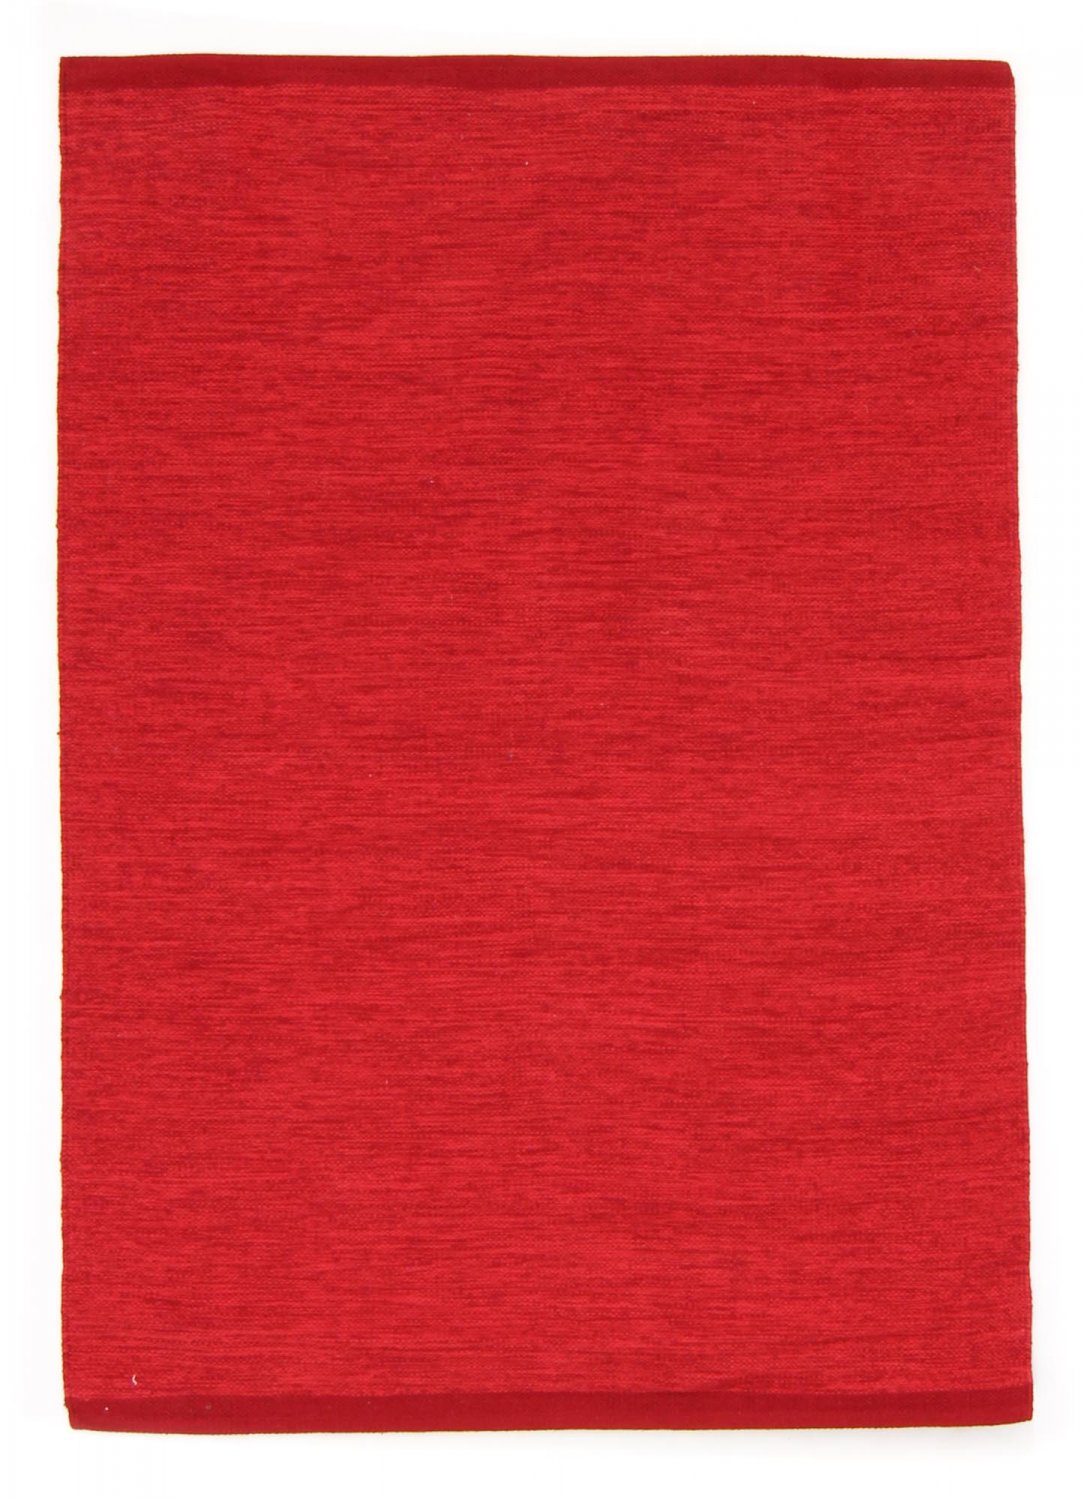 Kludetæppe - Slite (rød)